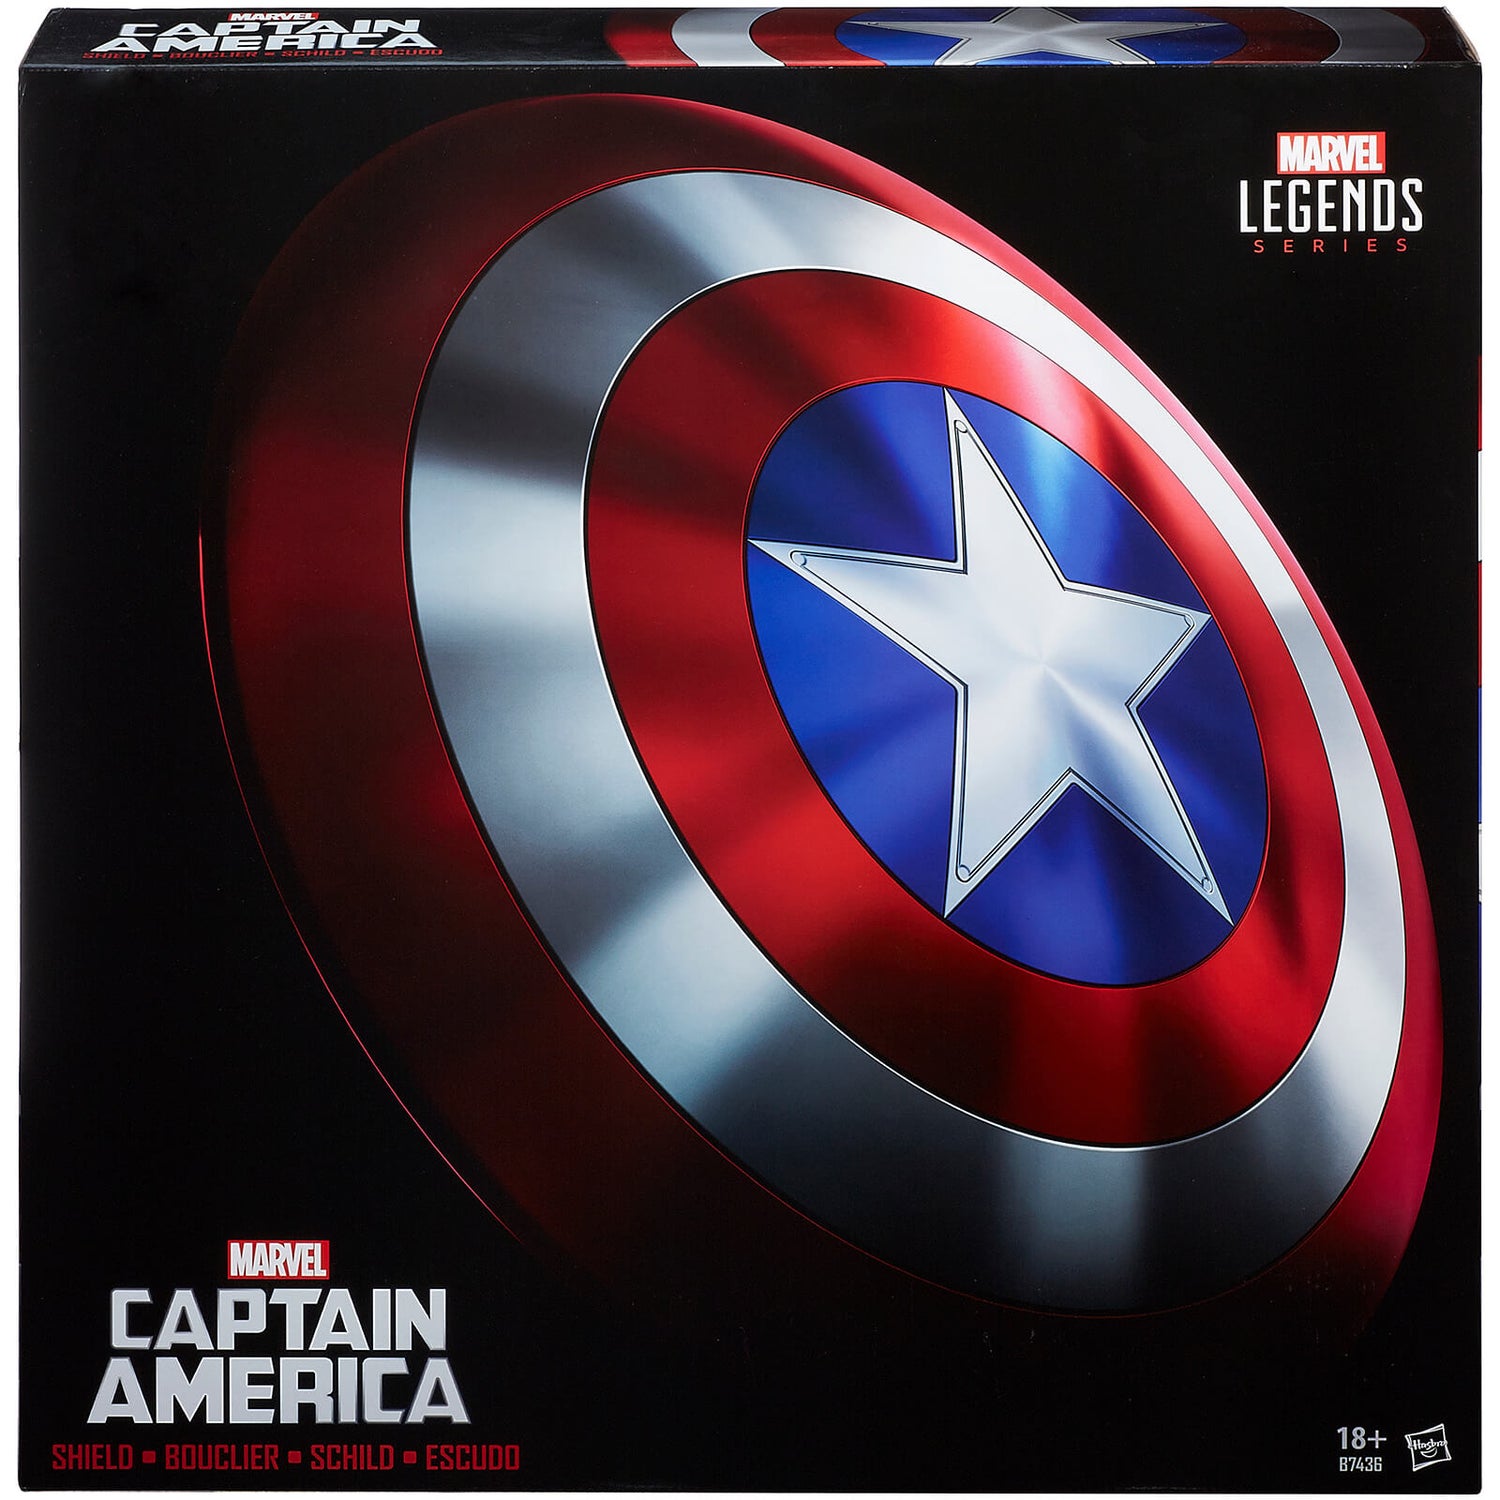 Toys　Hasbro　Replica　America　Marvel　1:1　Prop　Legends　SE　Avengers:　Captain　Shield　Zavvi